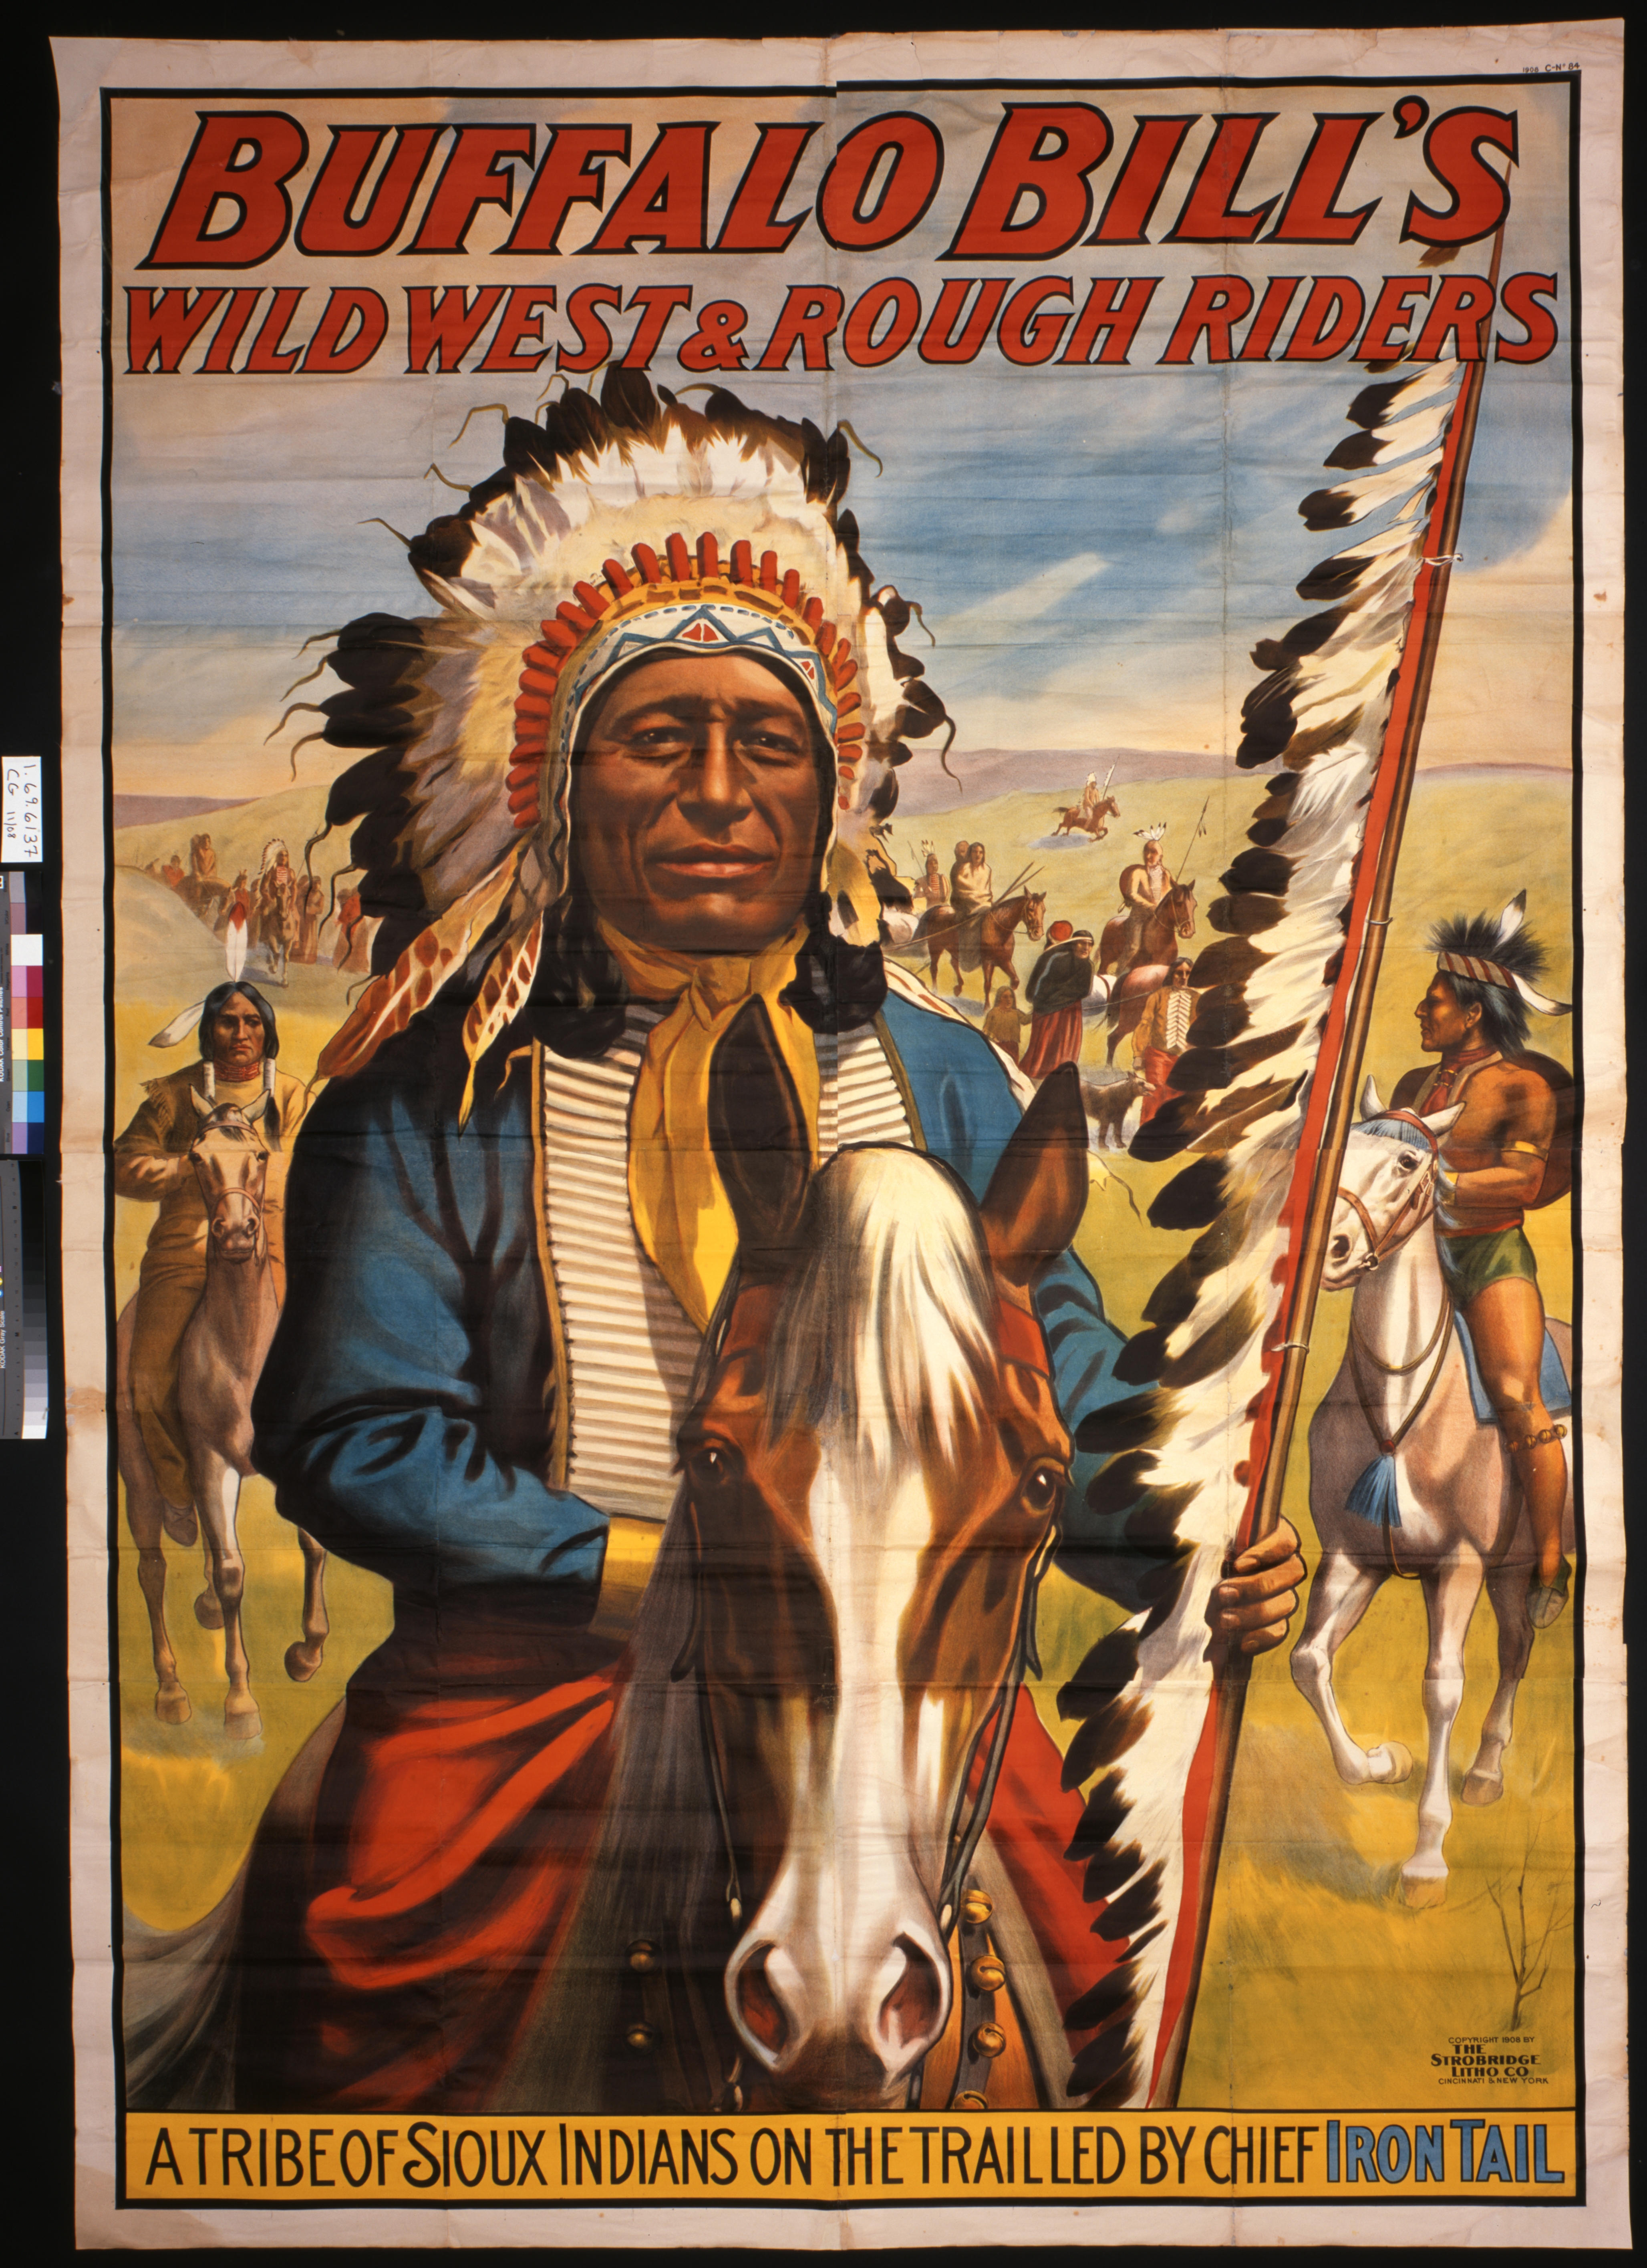 Native American Indian Buffalo Bills Rough Riders Horseback Poster Print A3 A4